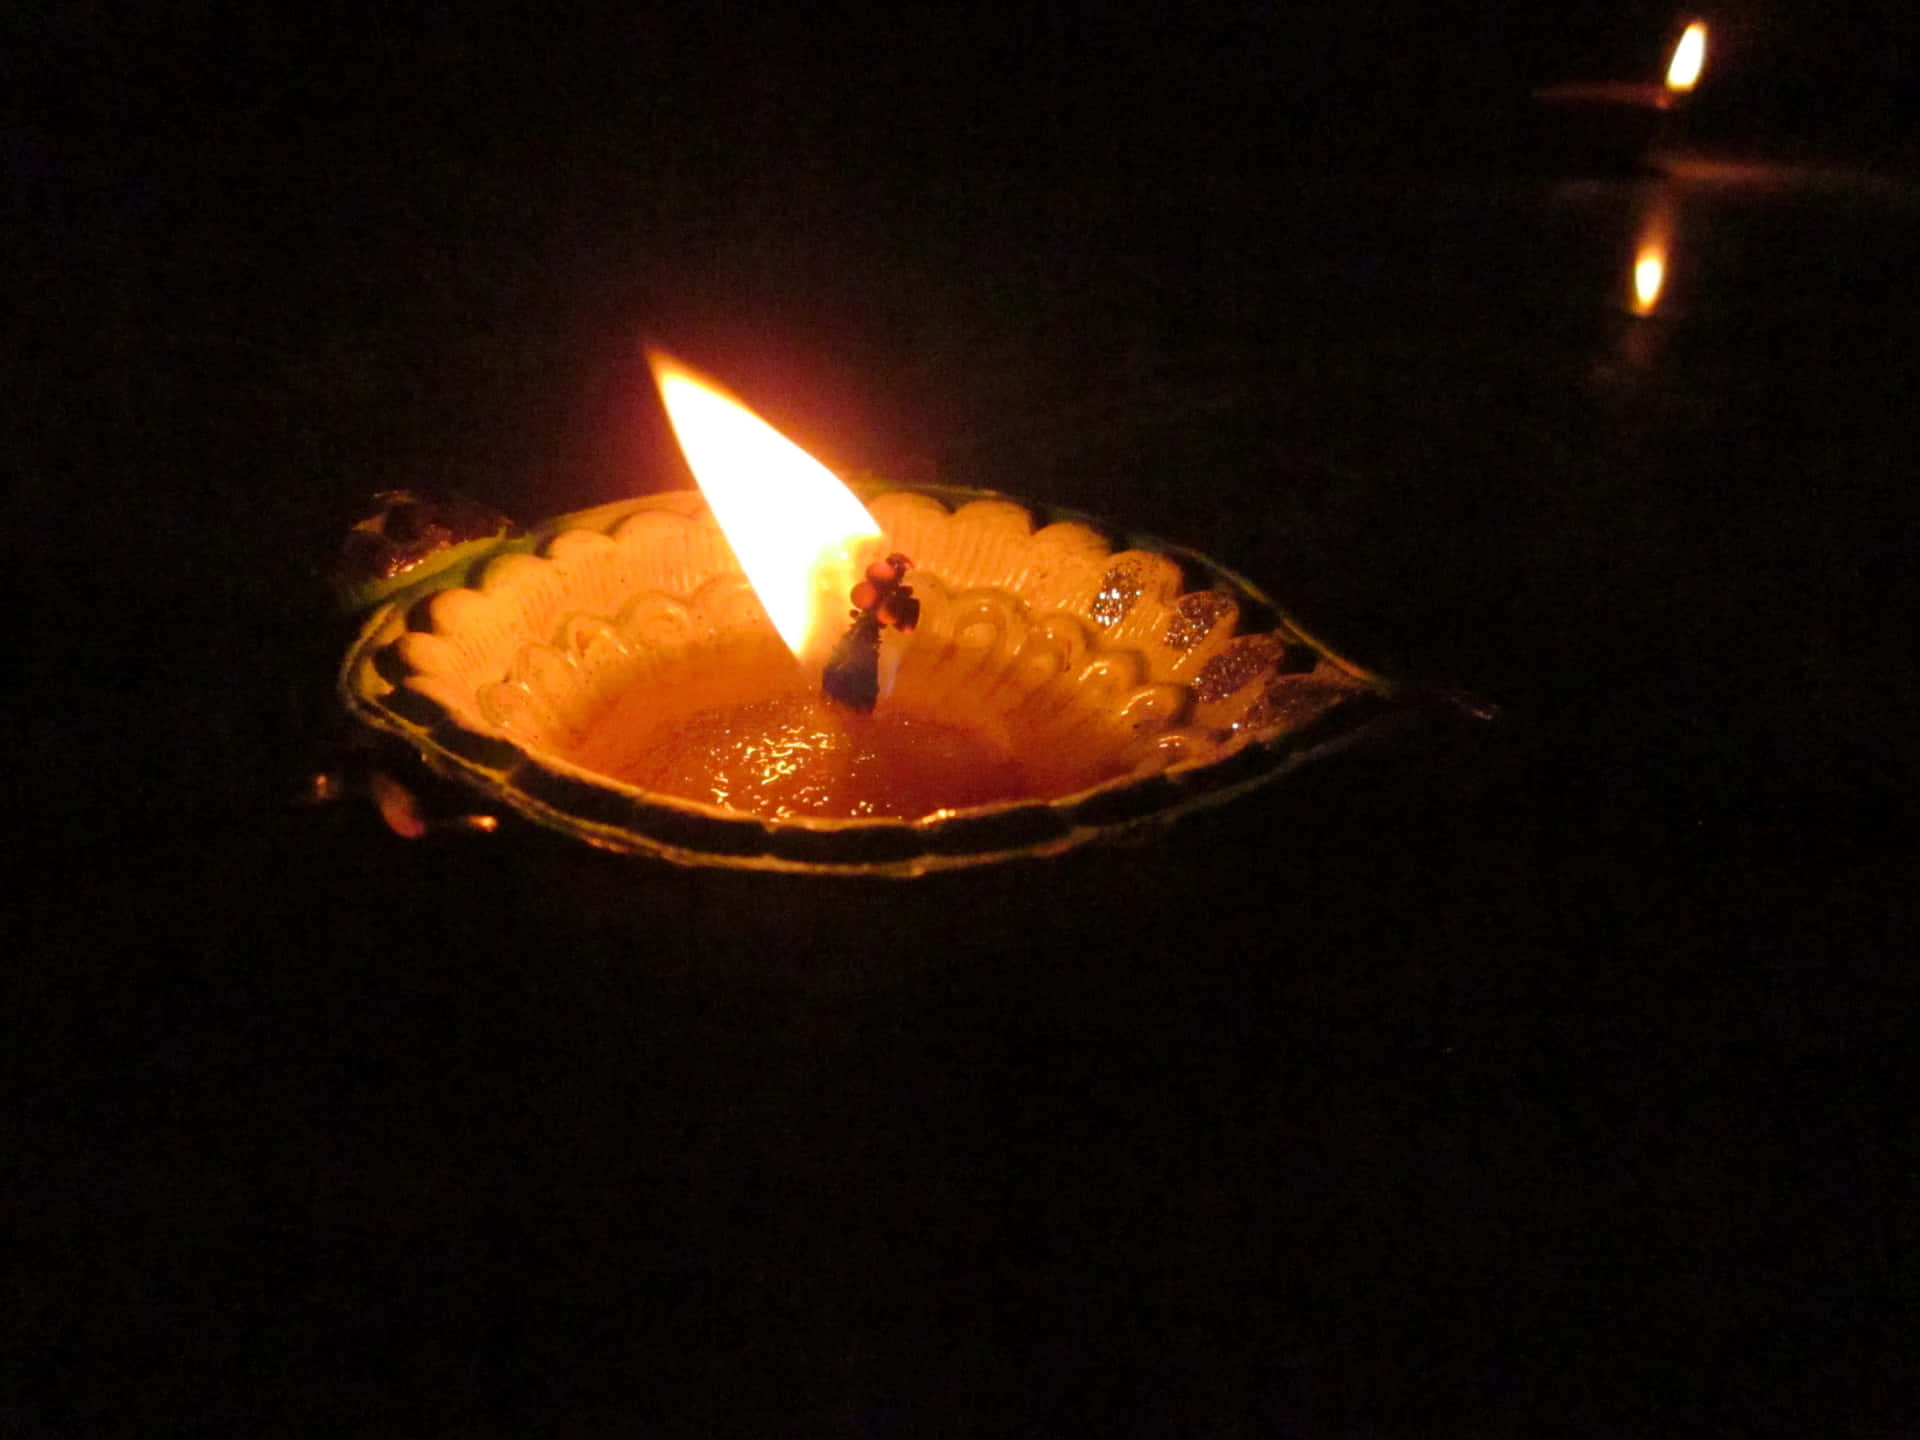 Dark Aesthetic Diwali Candle Background